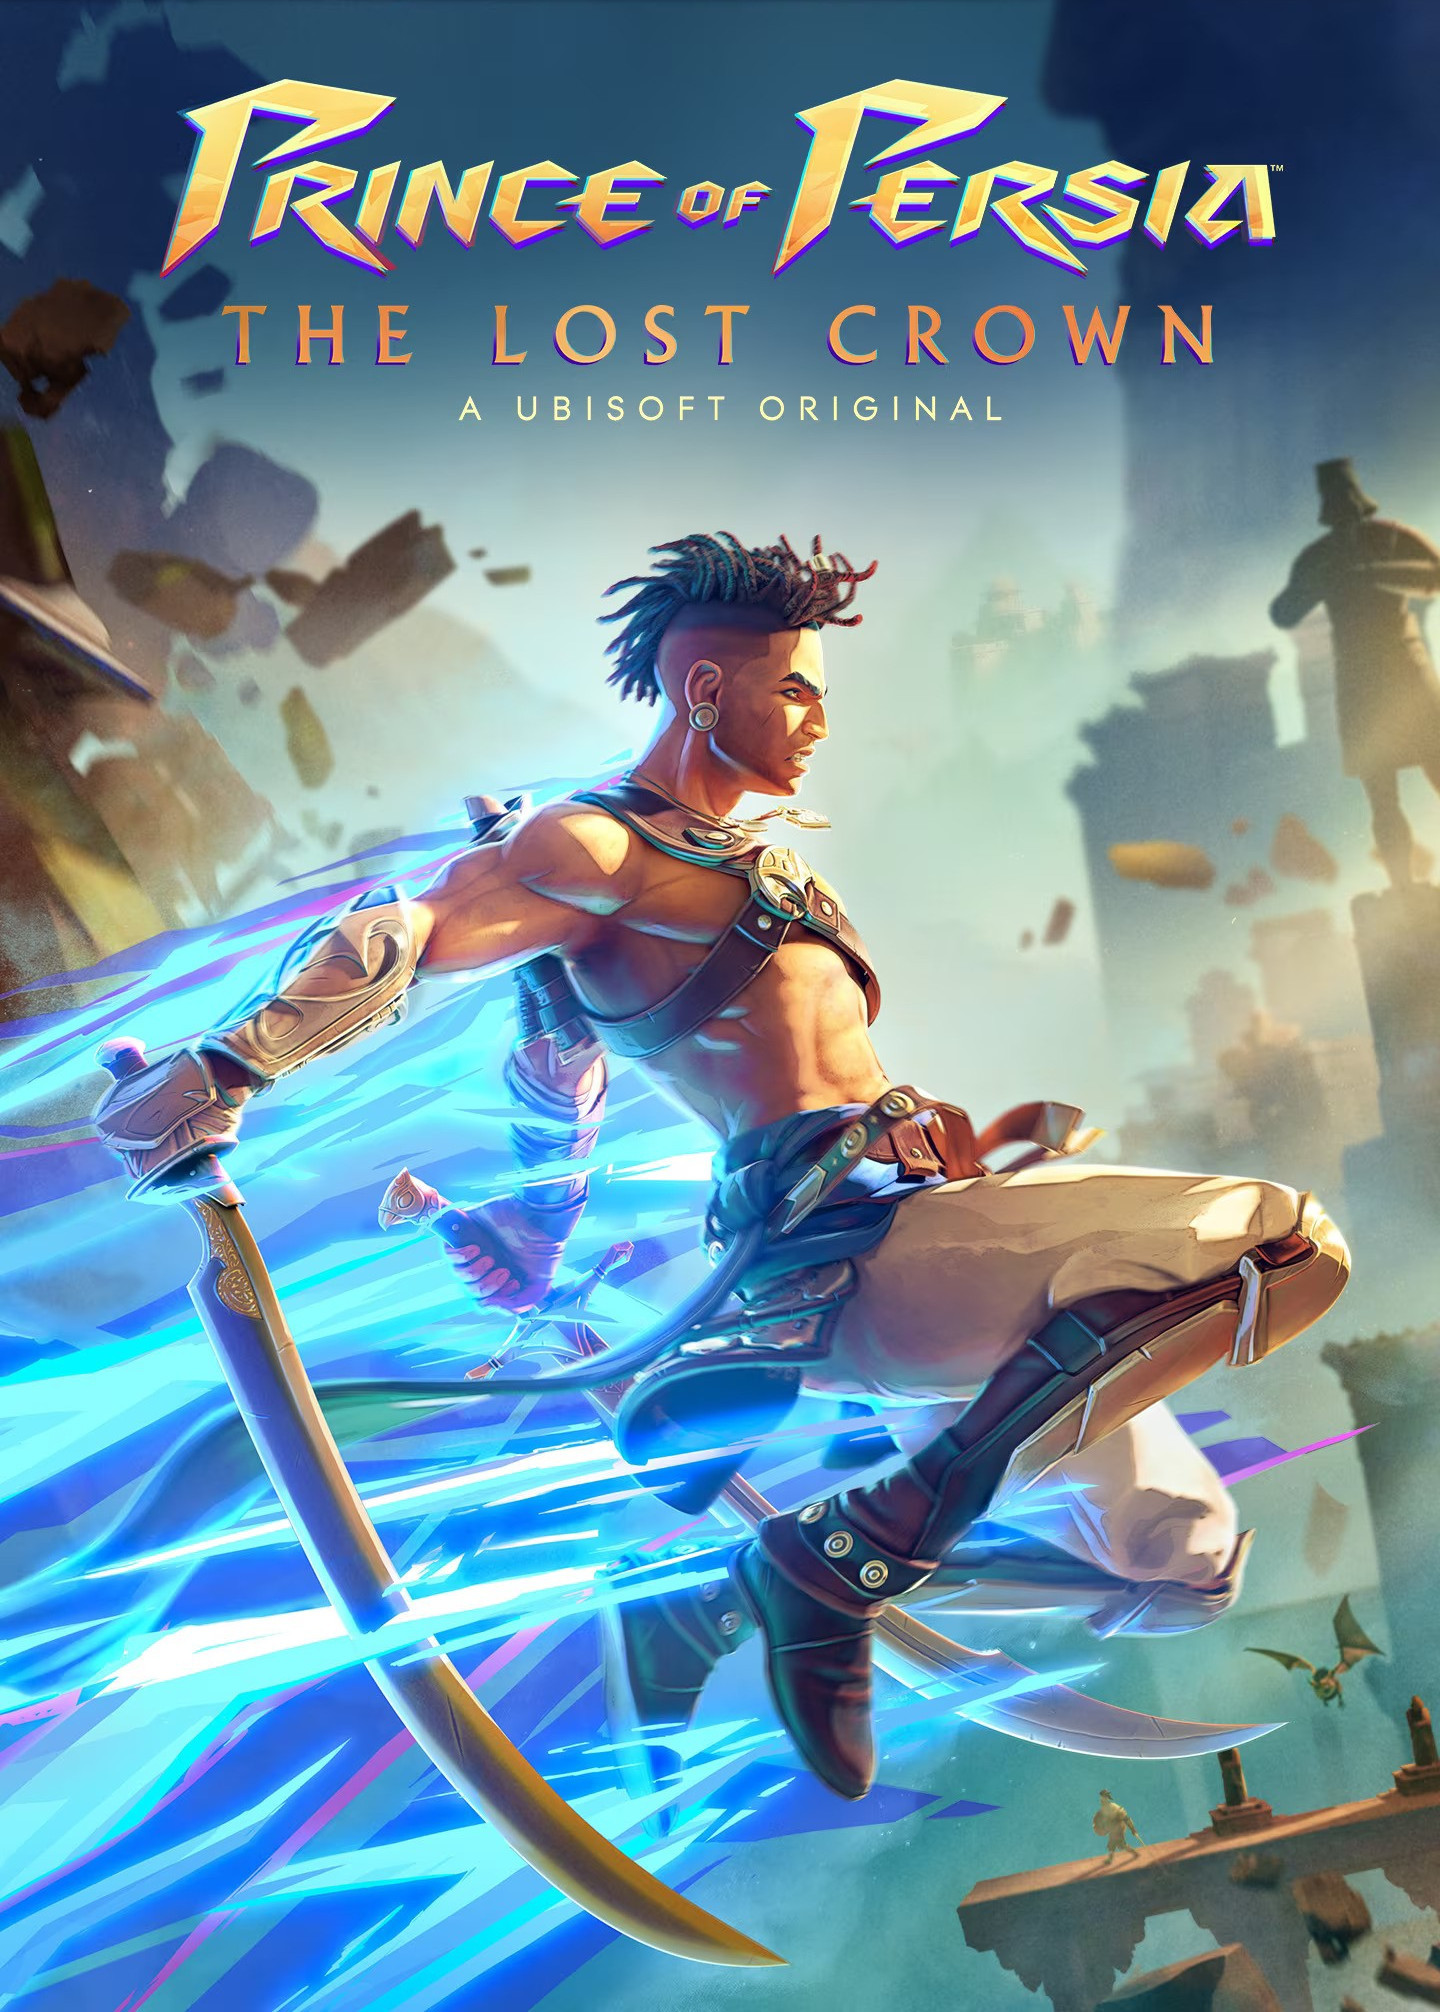 سی دی کی اریجینال بازی Prince of Persia: The Lost Crown